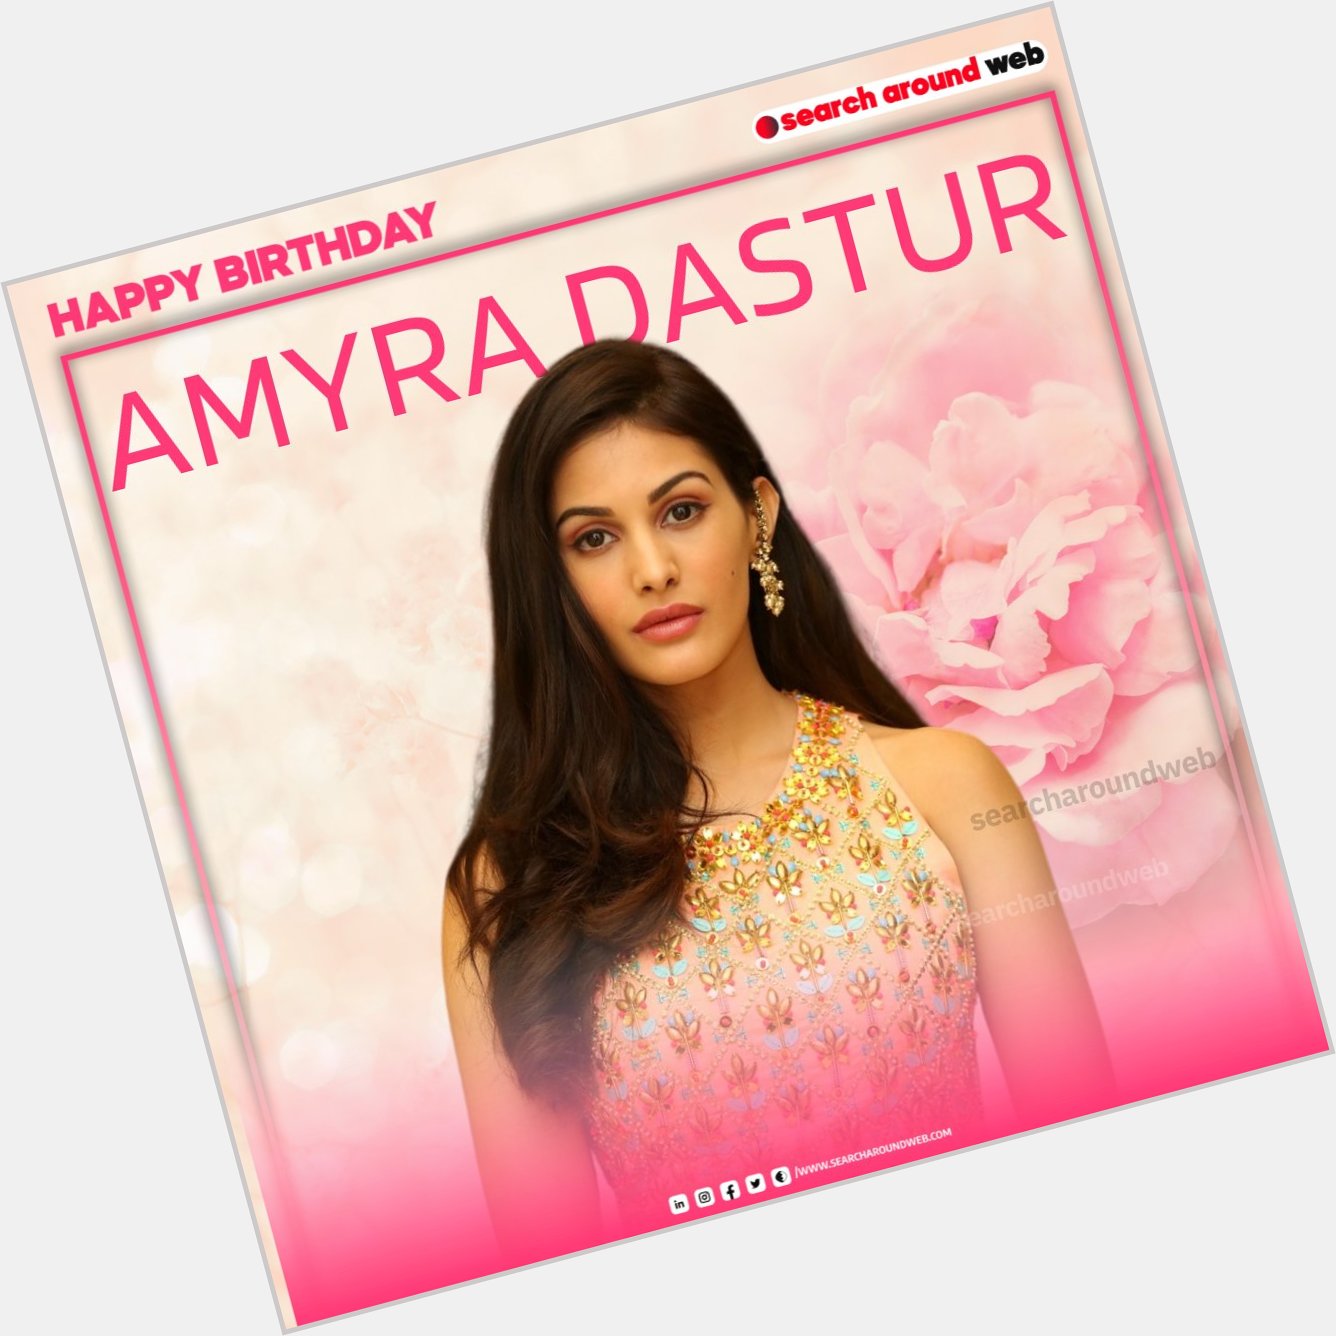  Happy Birthday - Amyra Dastur     